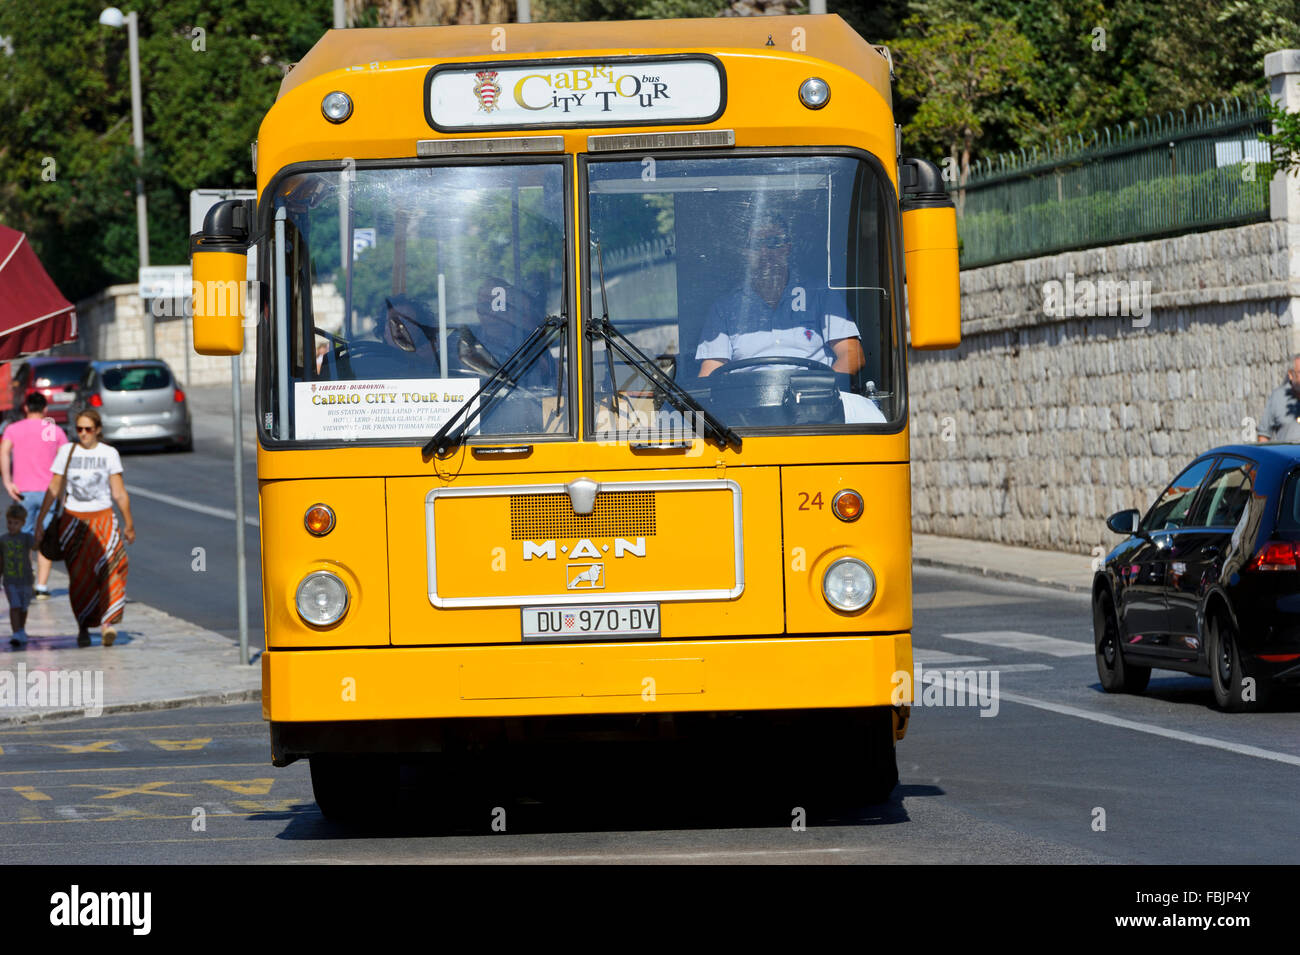 A public yellow bus in Dubrovnik, Croatia. Stock Photo